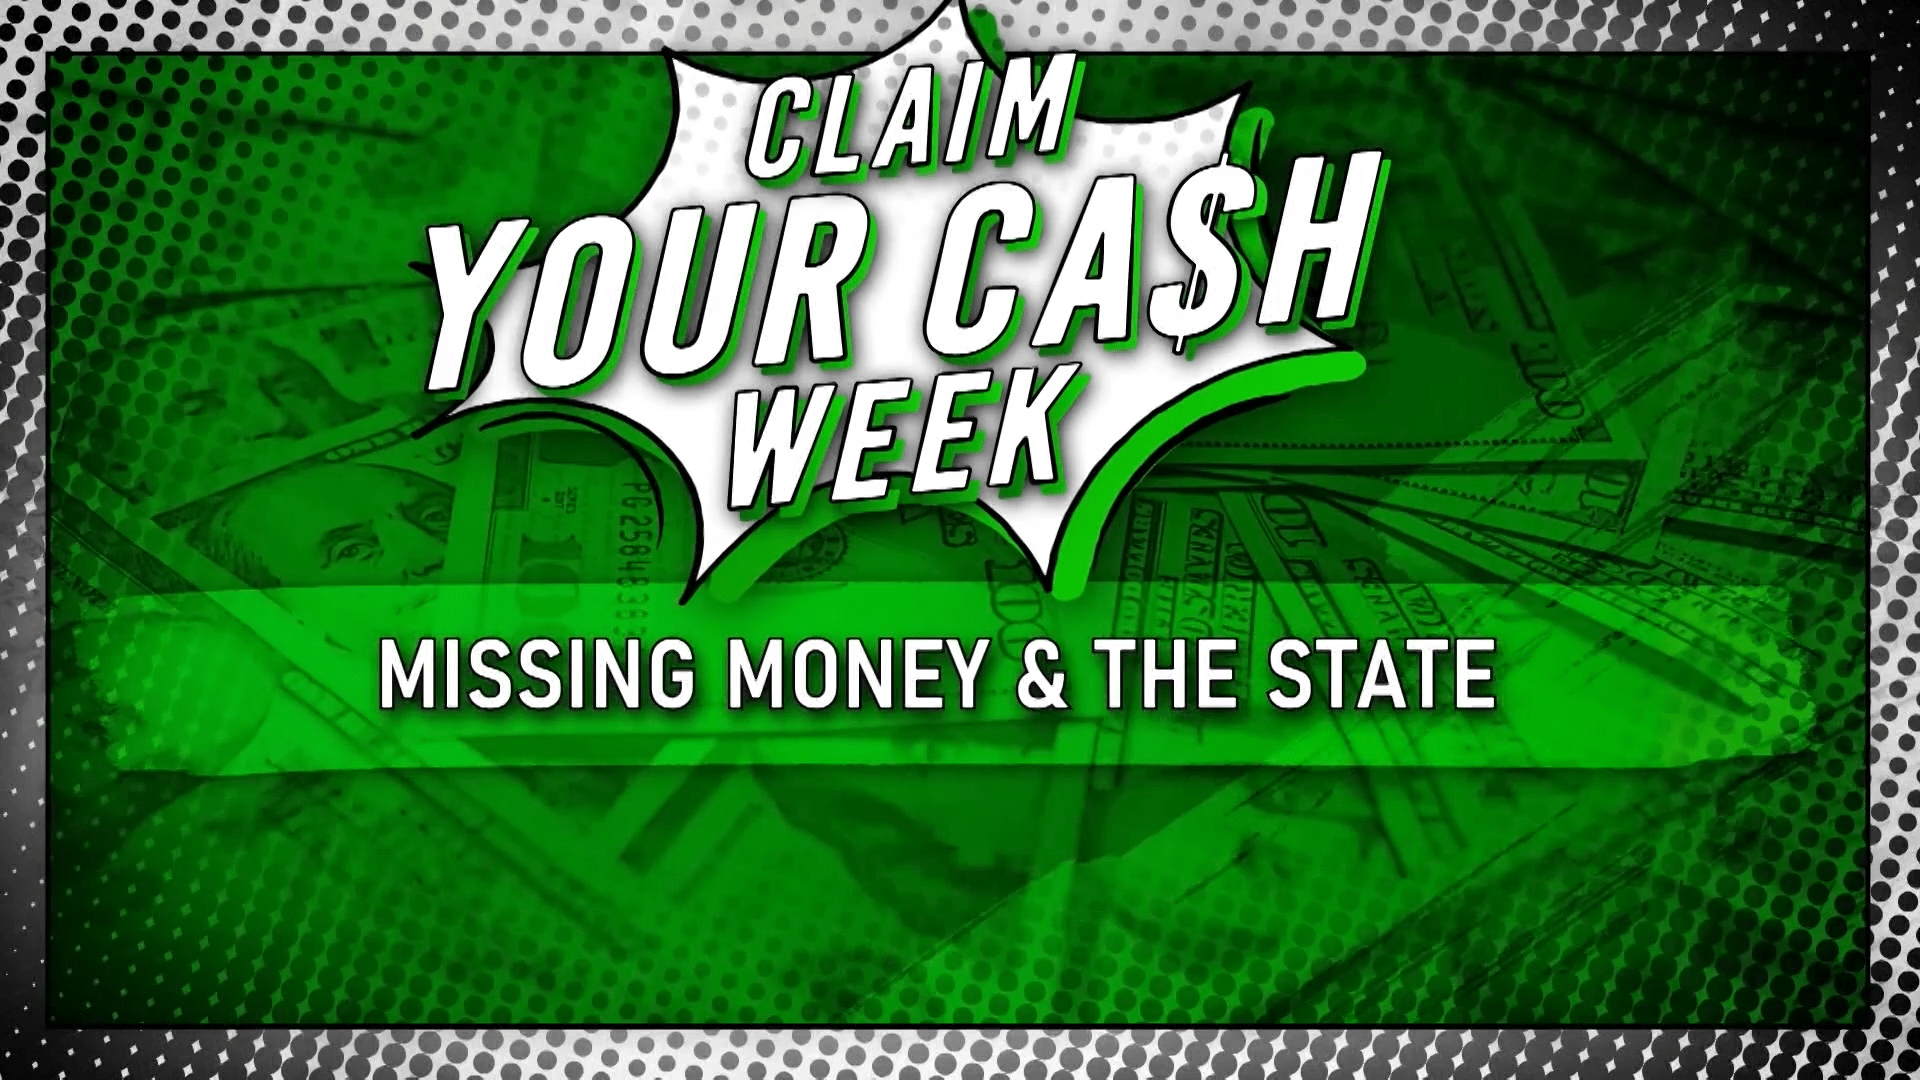 Claim your cash week